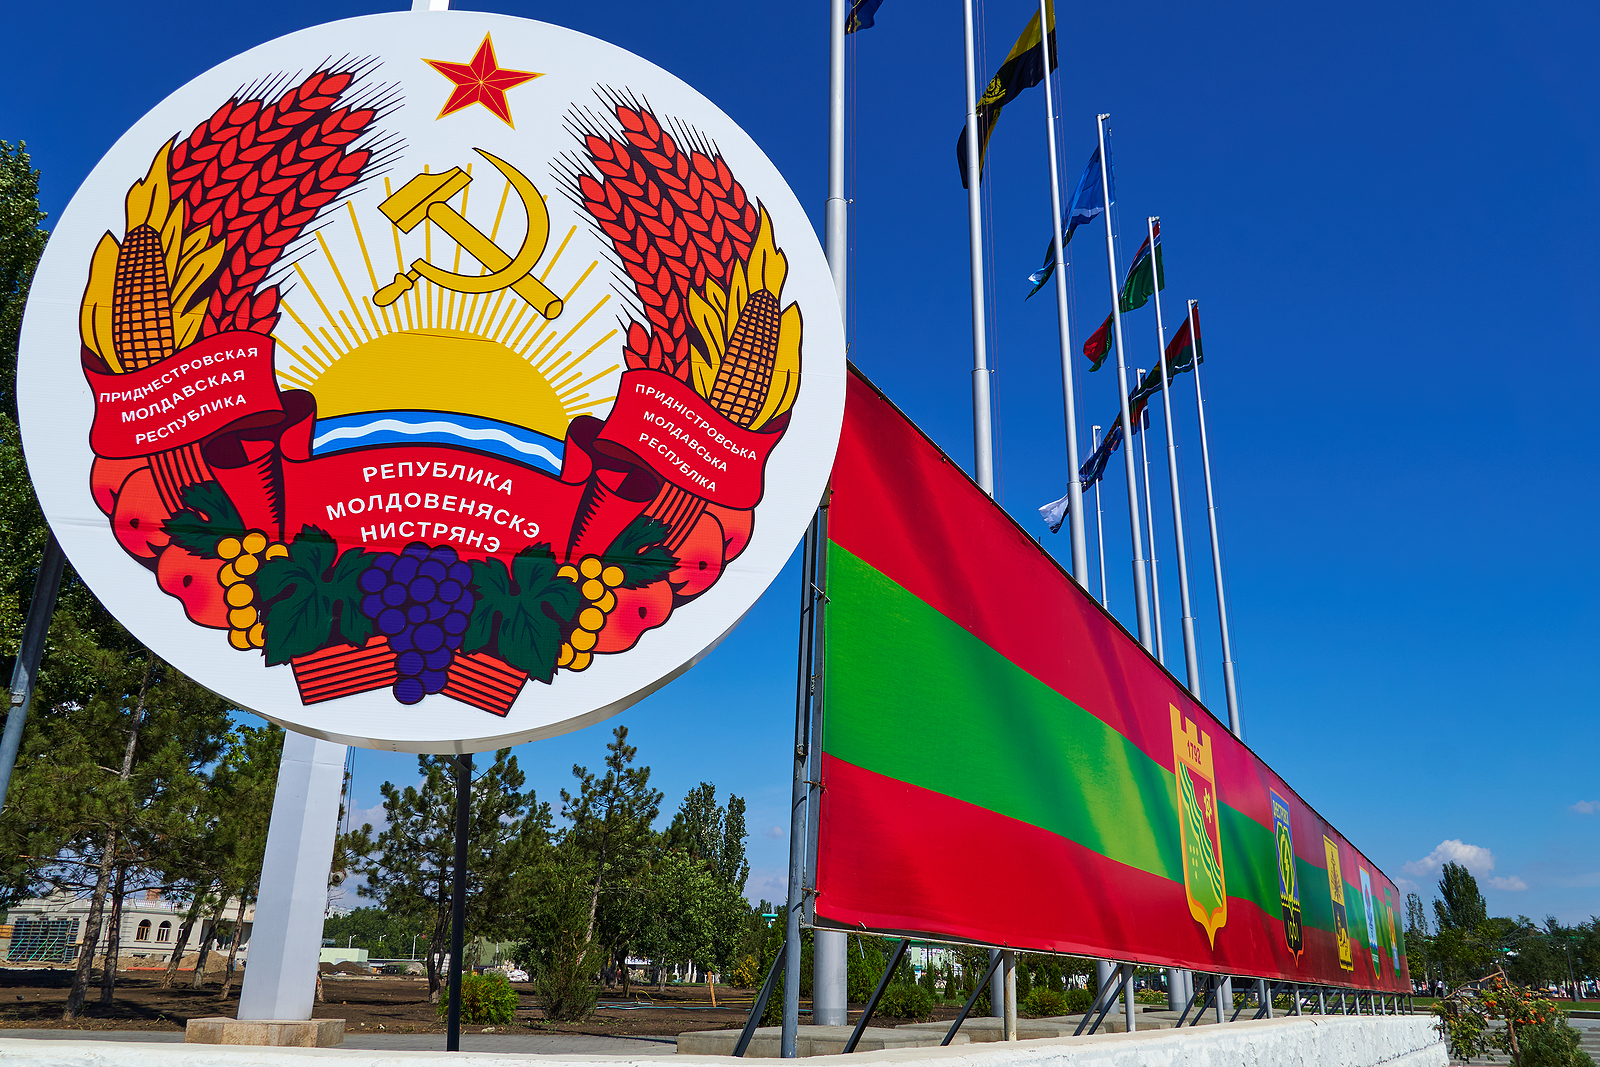 Tiraspol, Transnistria, Moldova - August 25, 2020: Transnistria